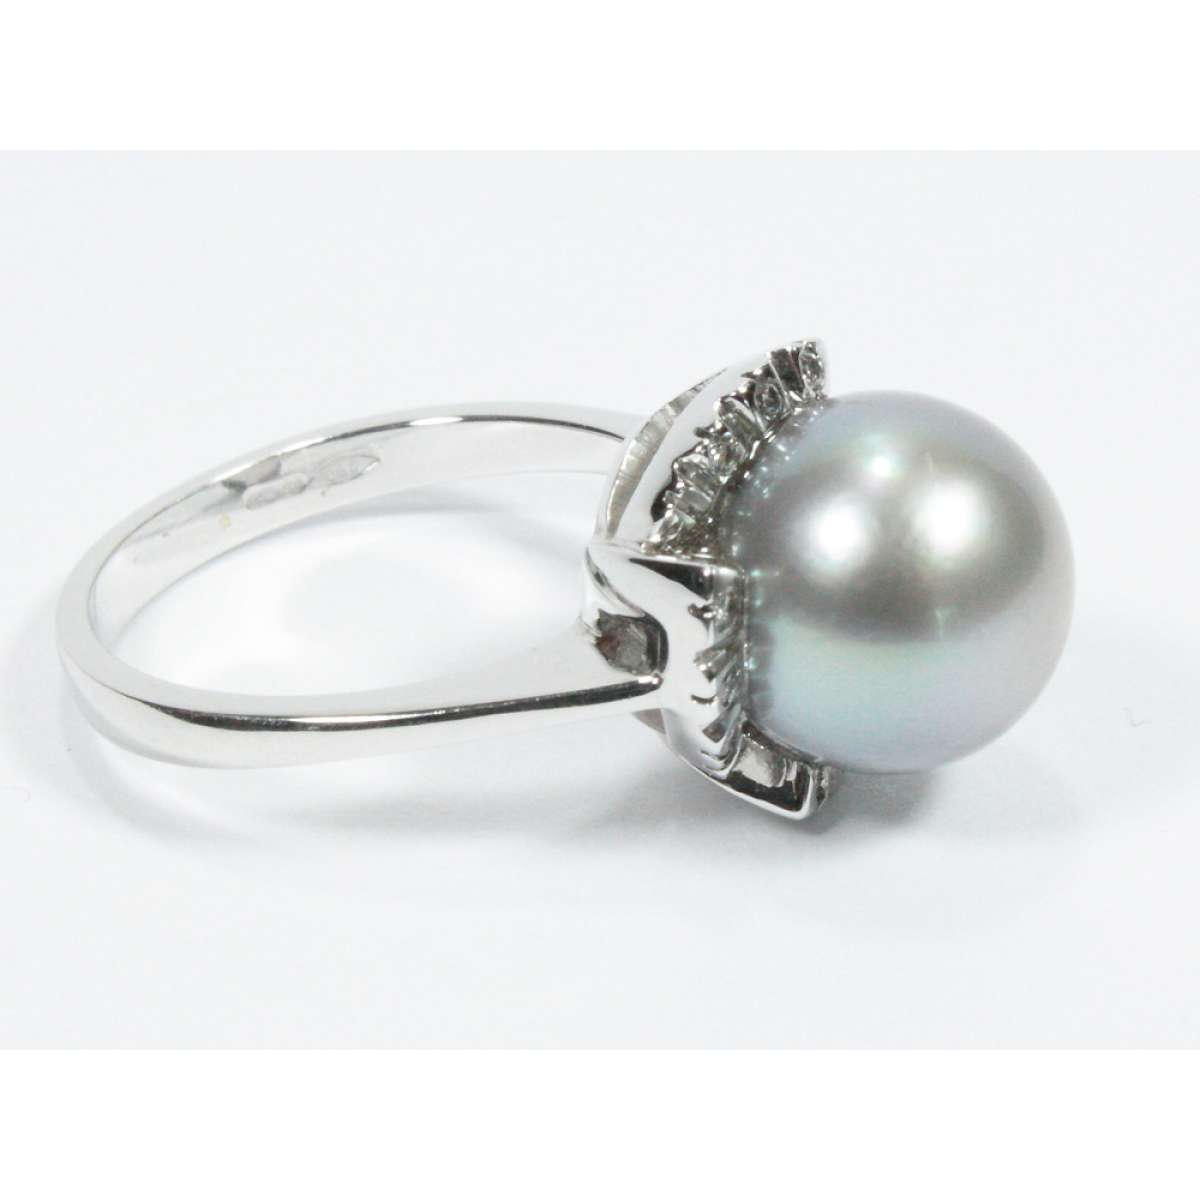 White gold ring with Tahiti gray pearl 11mm 0.12 carats diamonds G-VS1